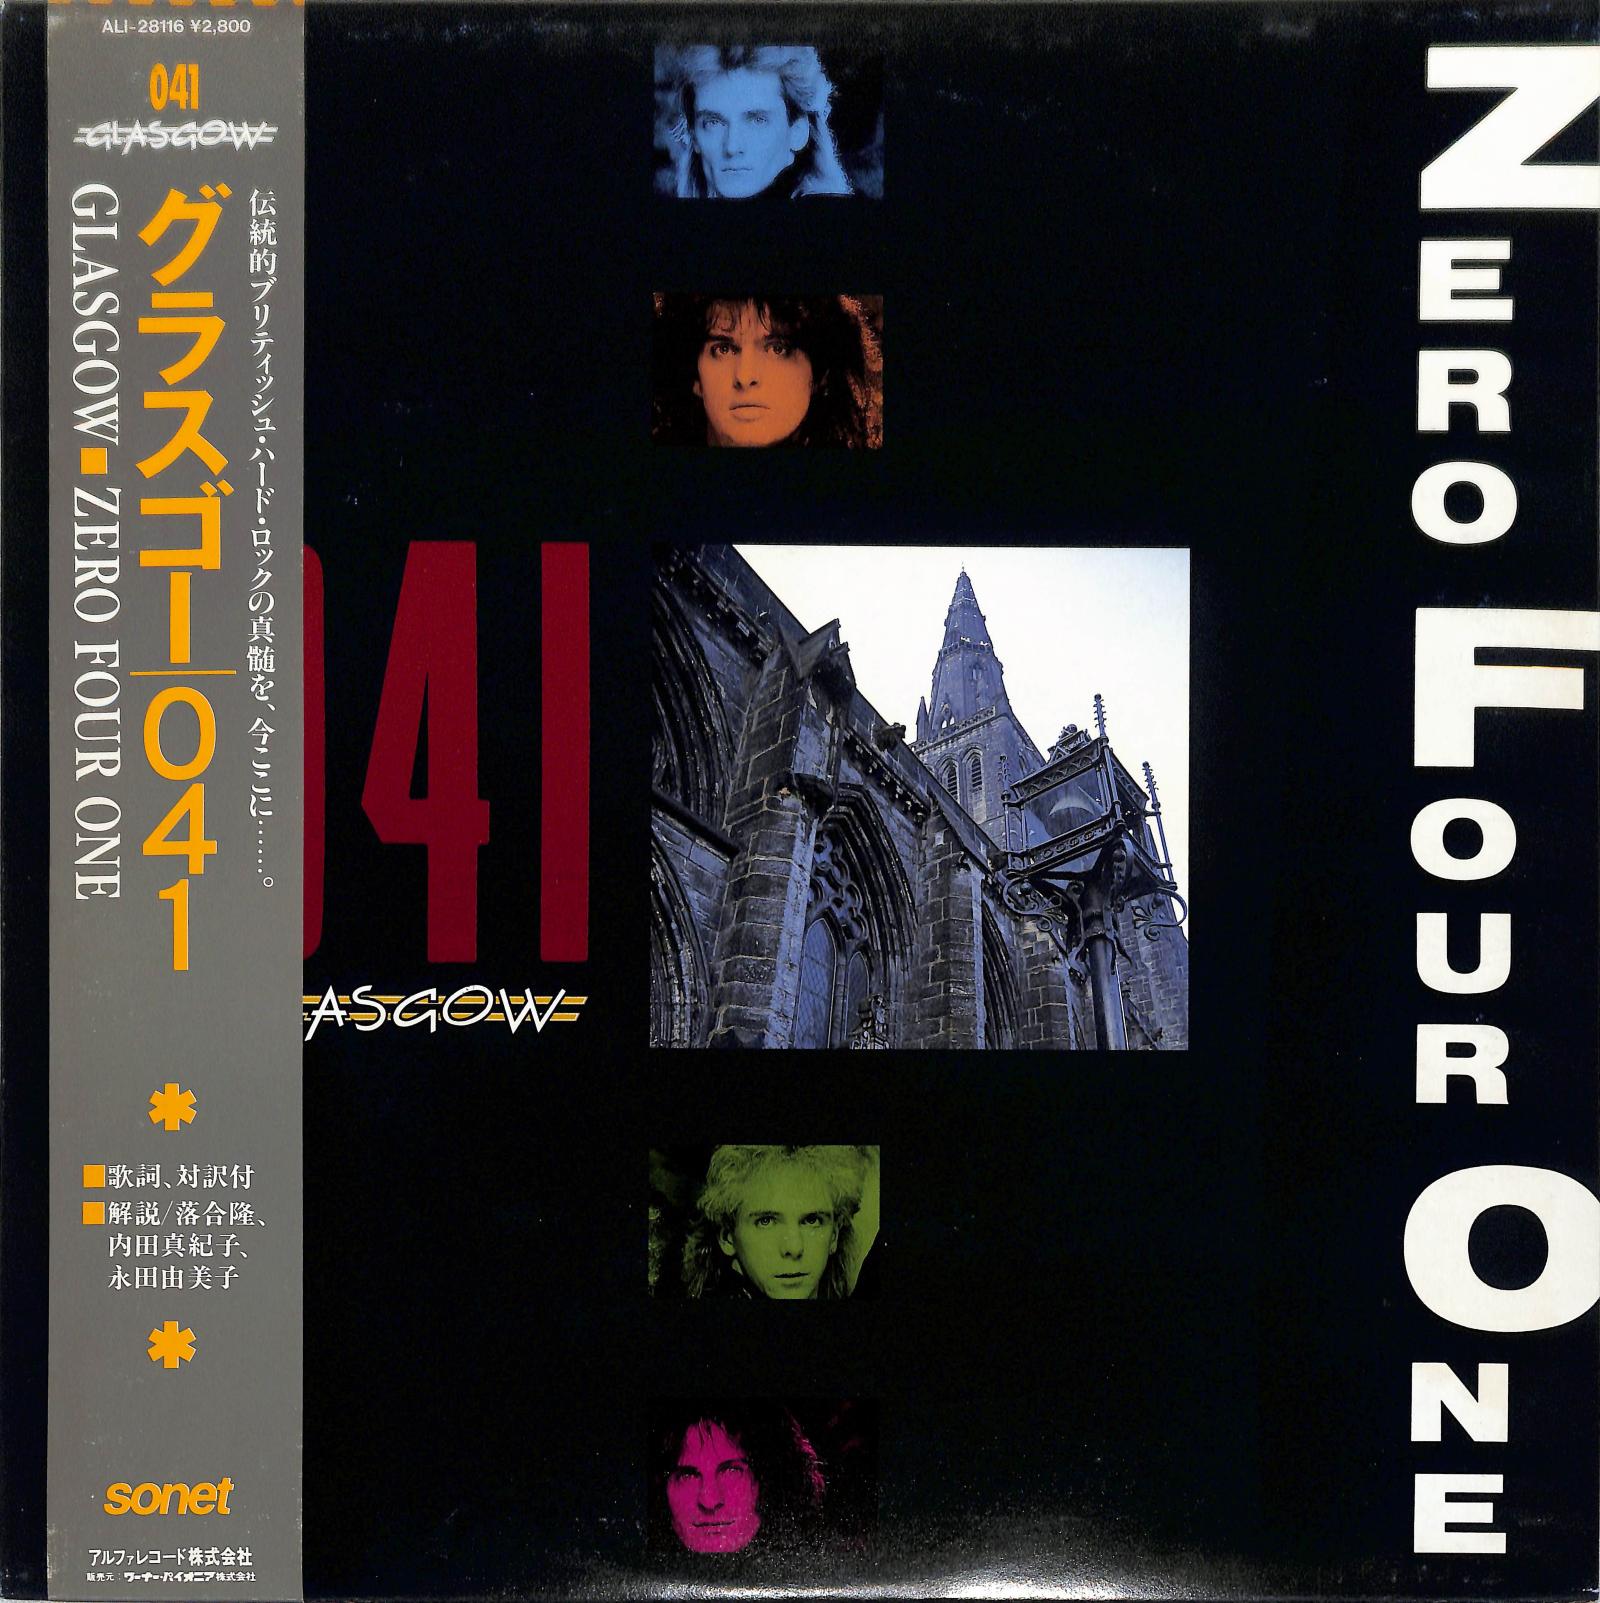 GLASGOW - Zero Four One